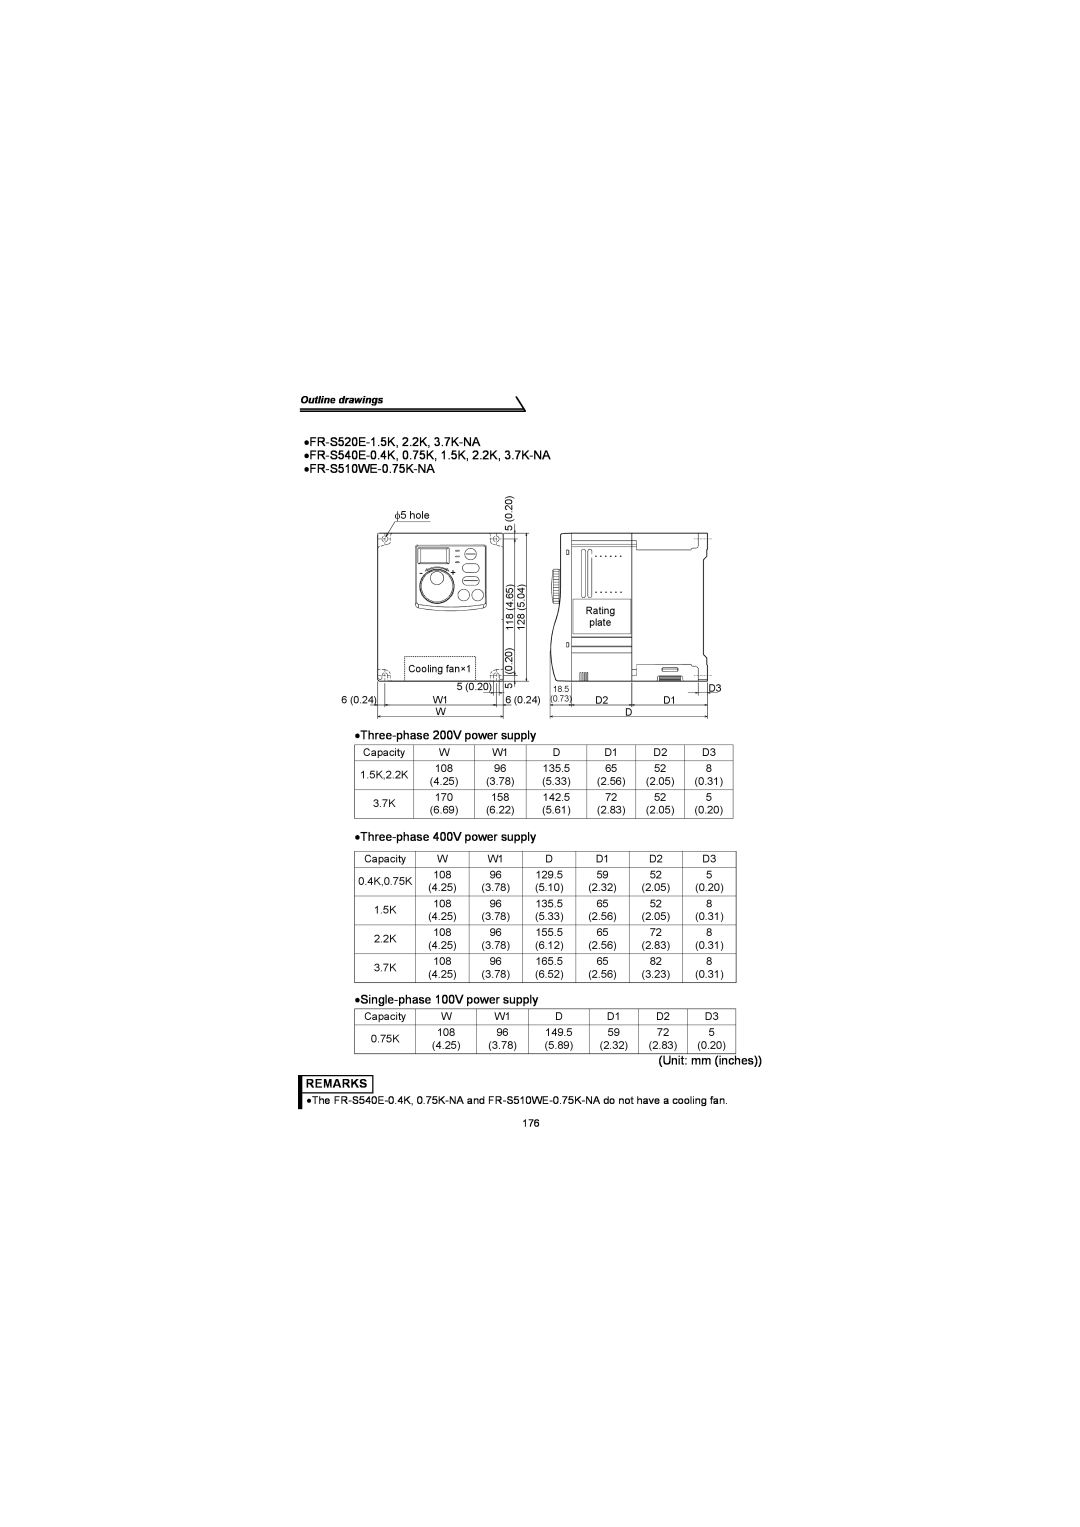 Mitsubishi Electronics FR-S500 instruction manual Outline drawings, φ5 hole, 0.20, Cooling fan×1 